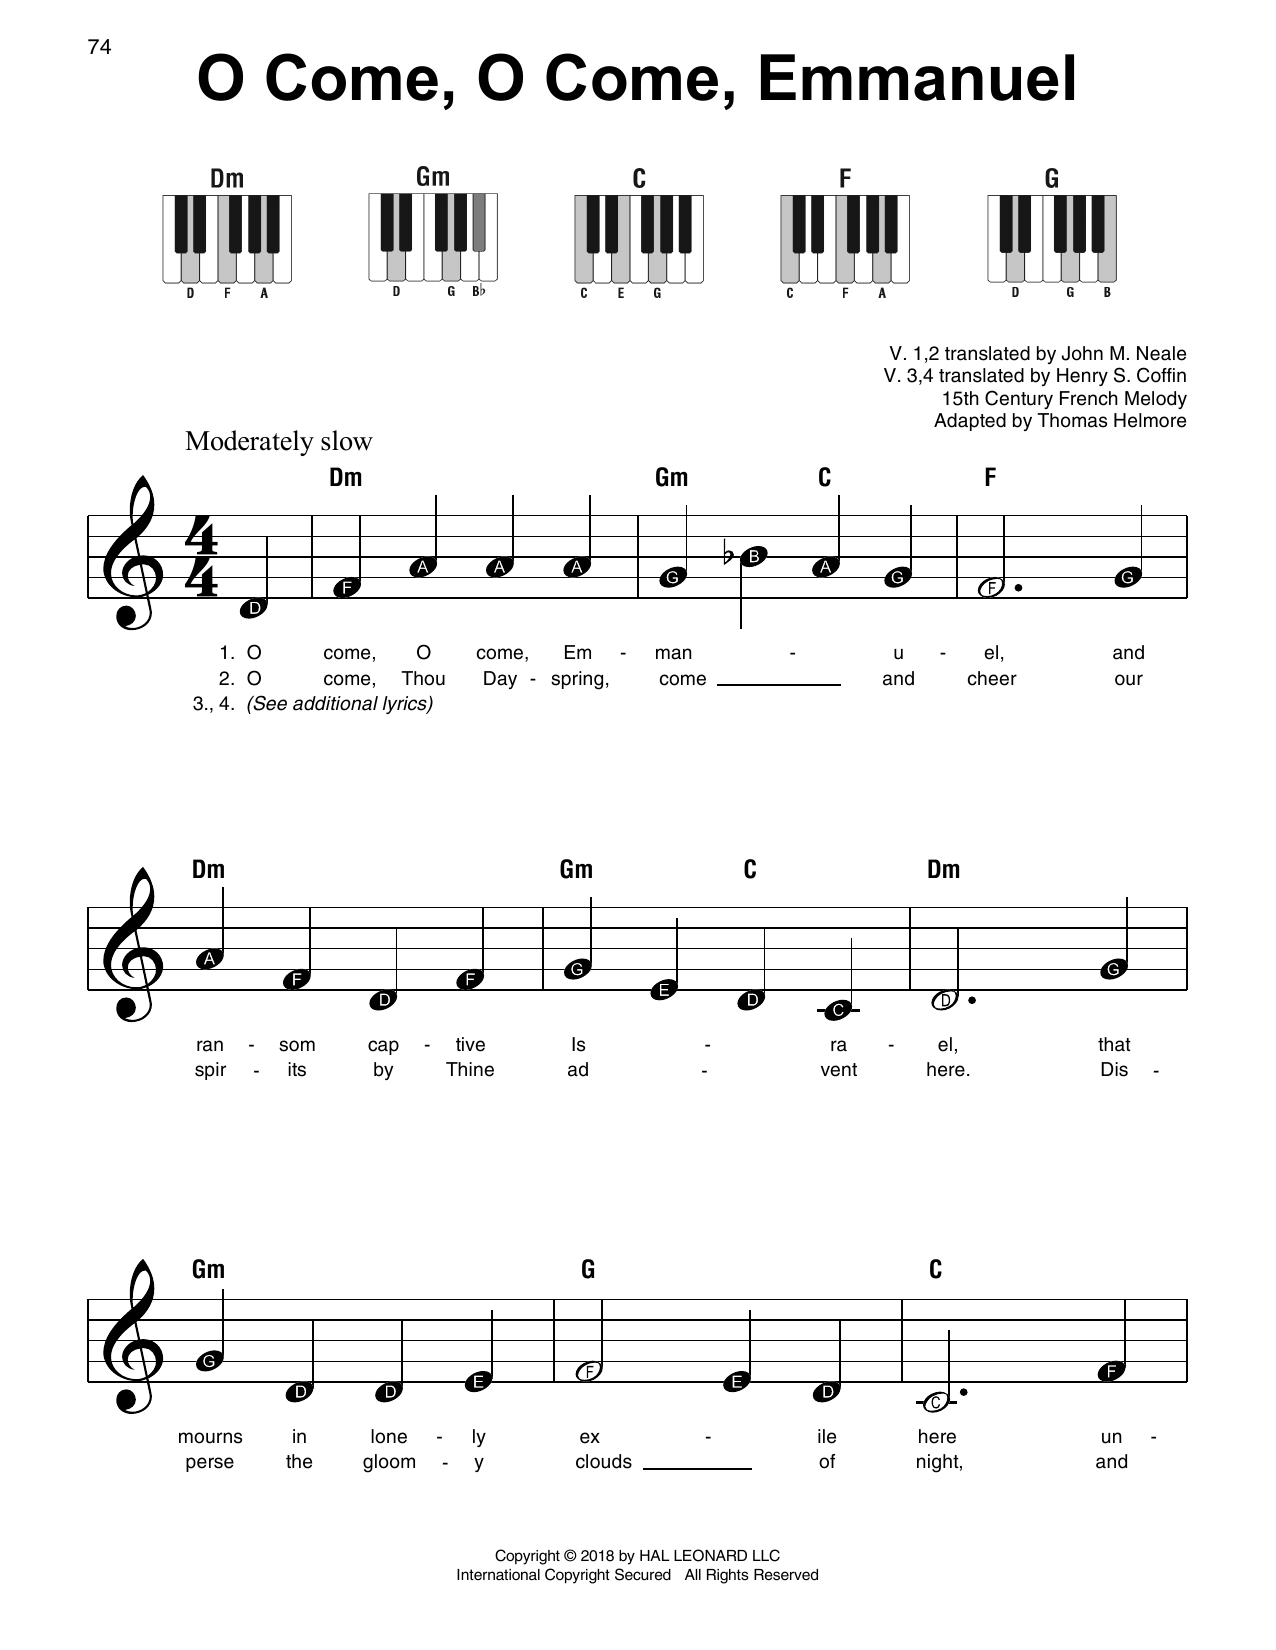 Christmas Carol O Come, O Come, Emmanuel Sheet Music Notes & Chords for Beginner Piano - Download or Print PDF